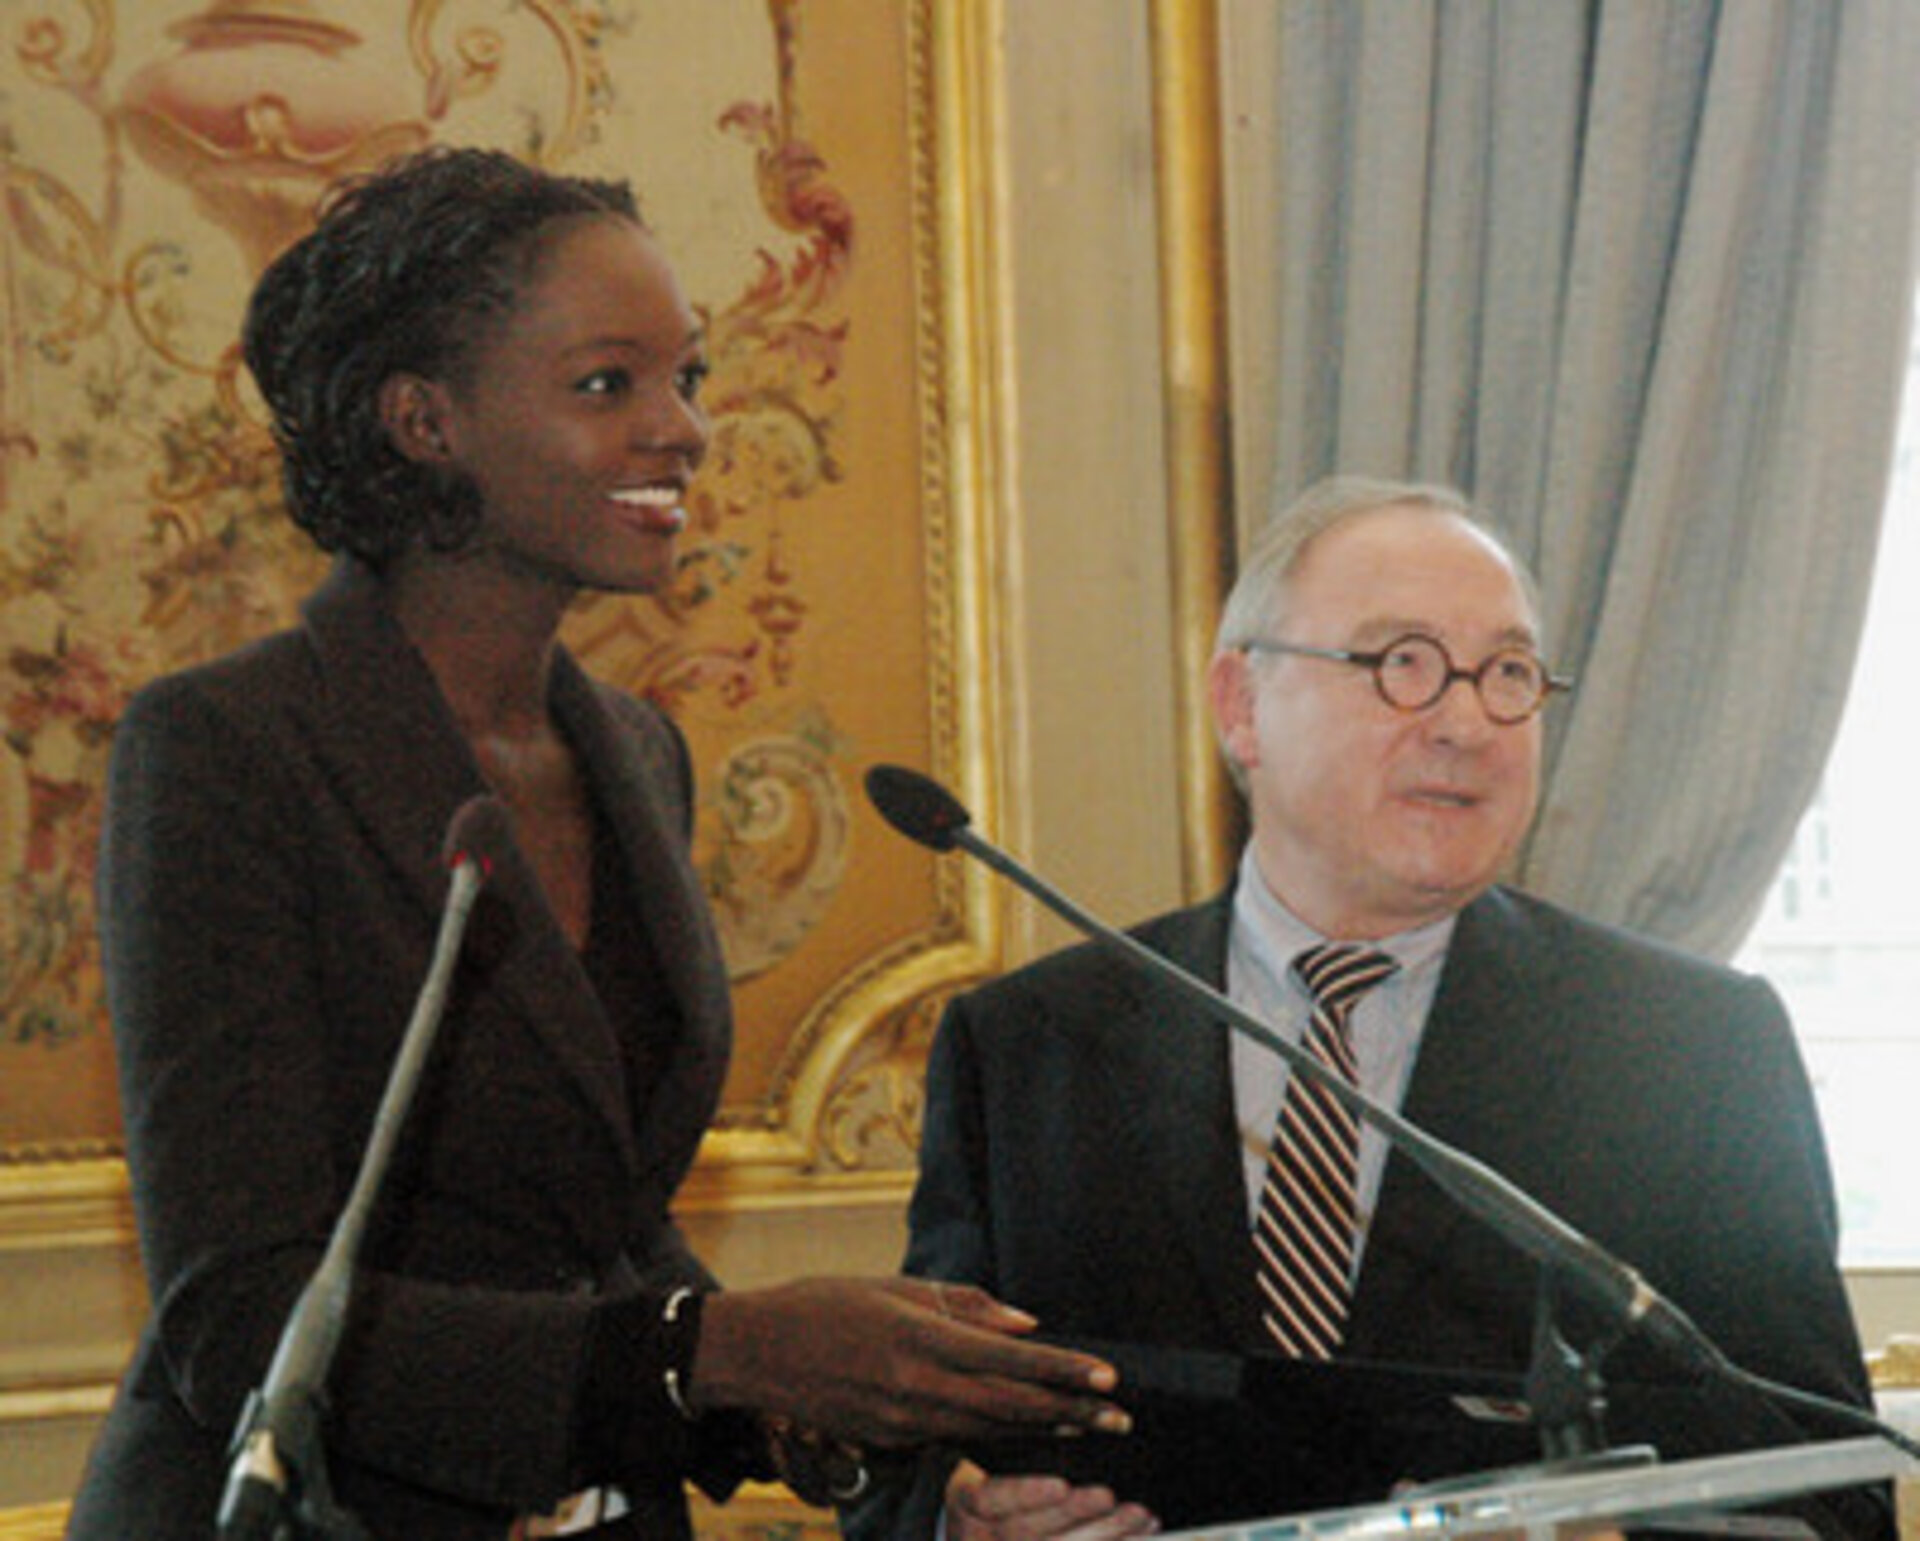 Rama Yade hands over a copy of the Declaration to ESA DG Jean-Jacques Dordain